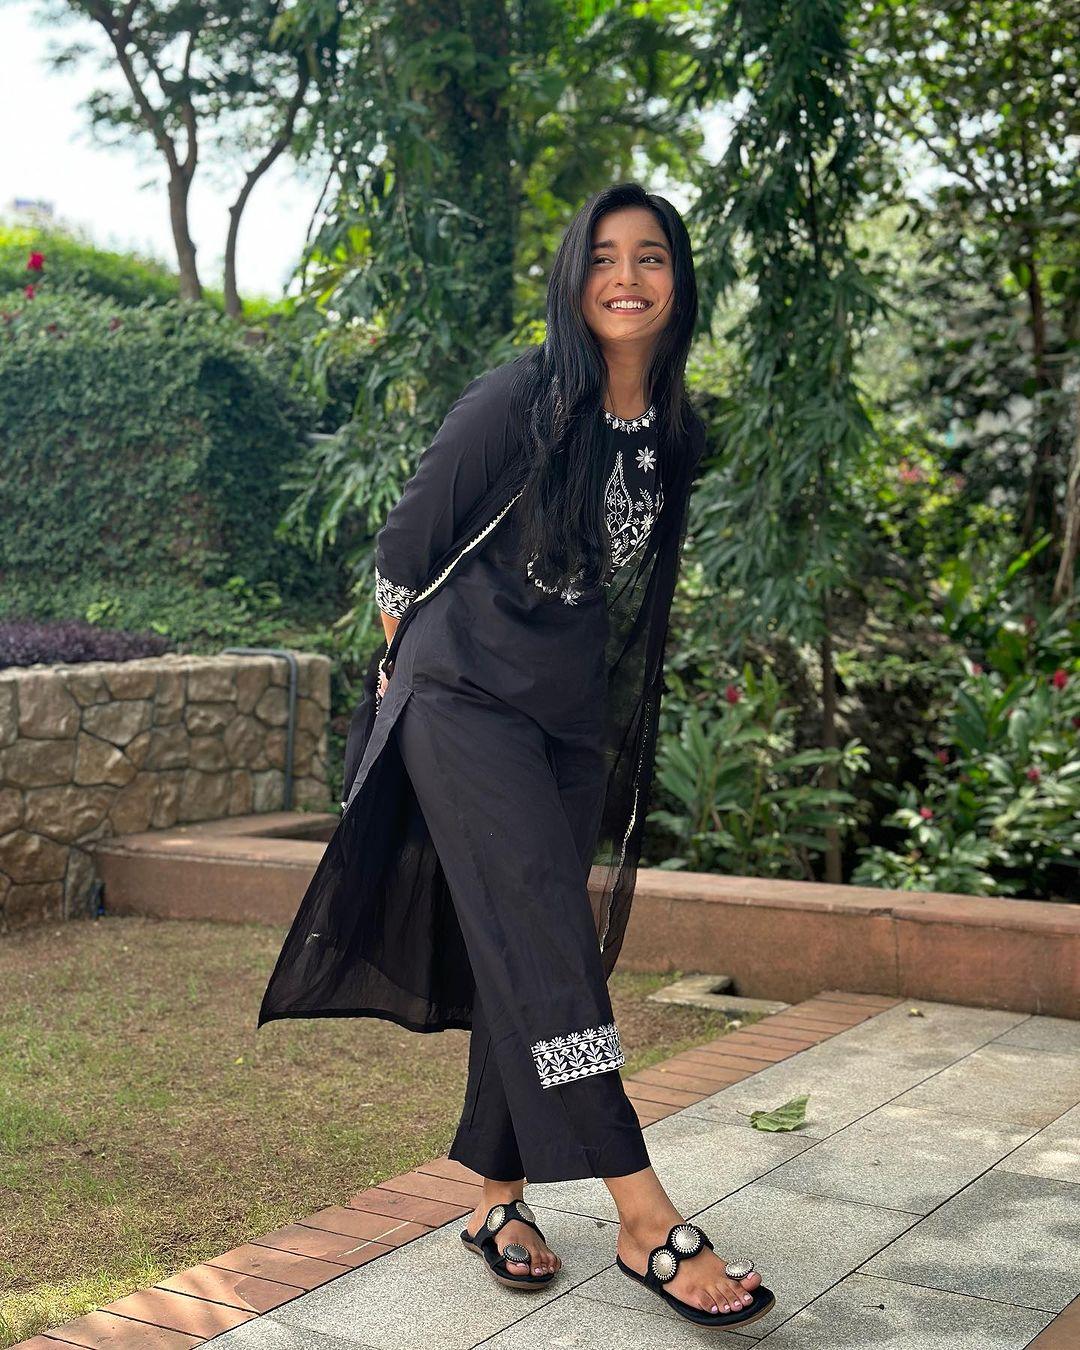 Switching gears to something more simple yet elegant, Sumbul wore this black salwar kameez that made her look beautiful